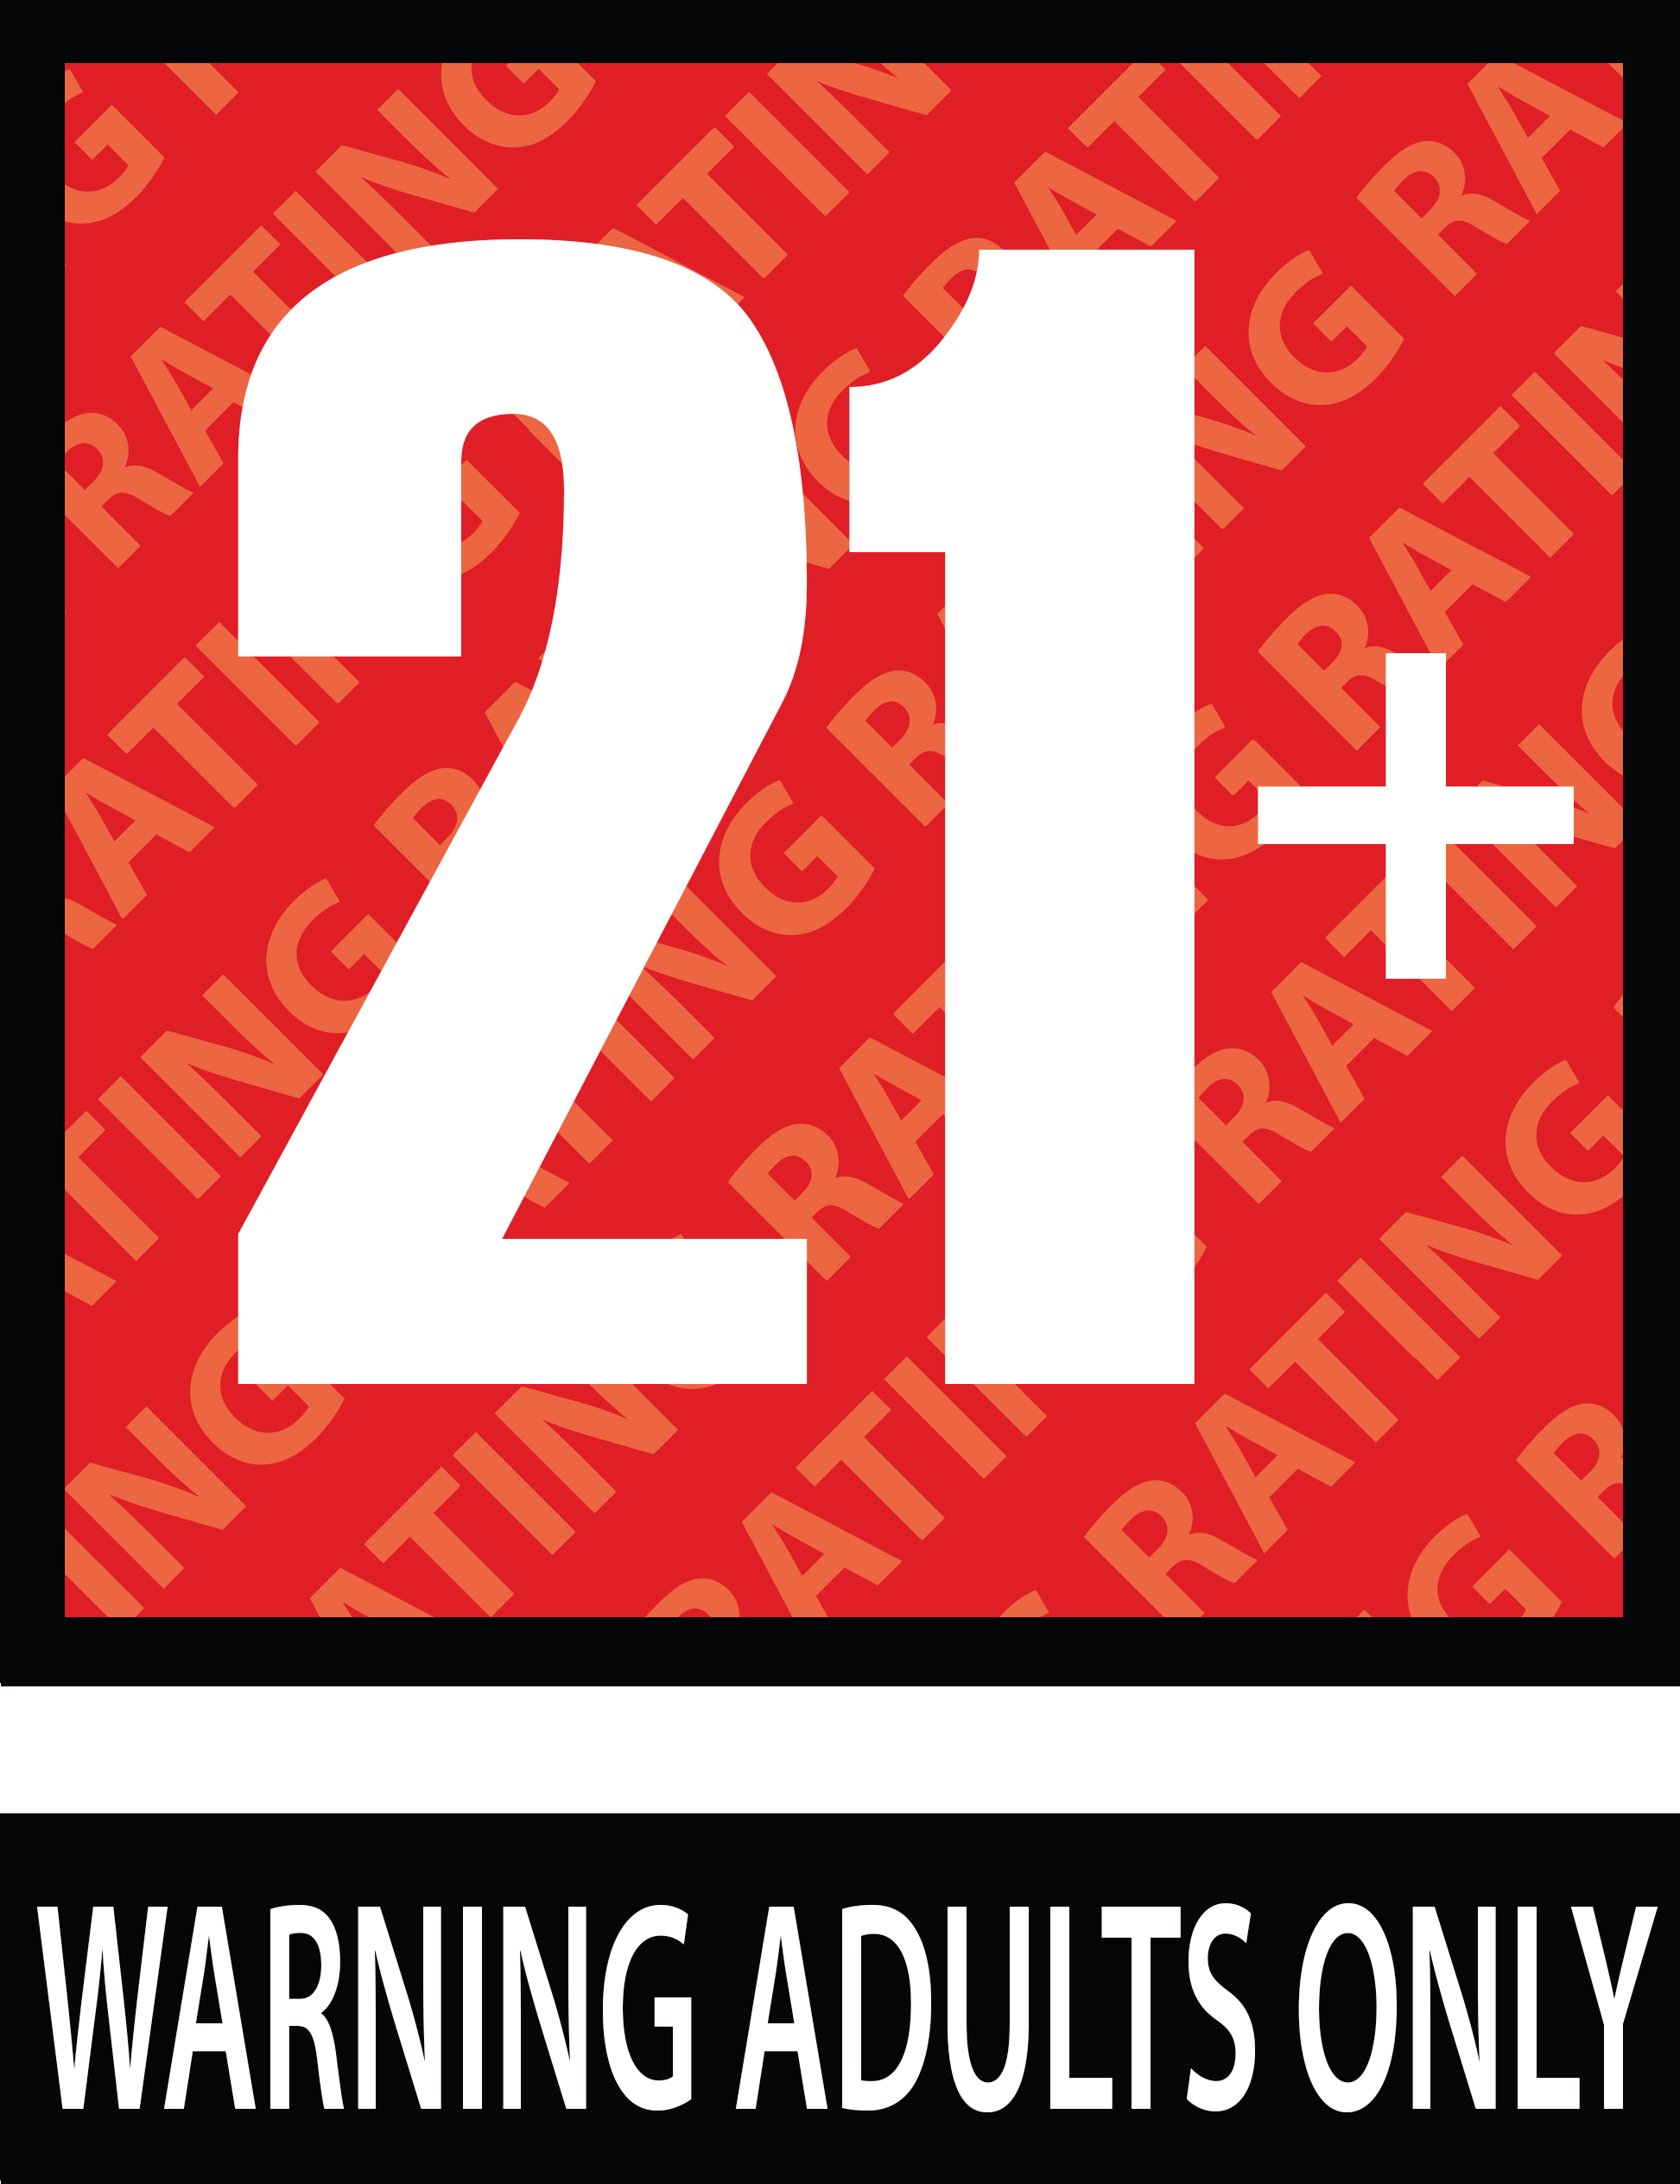 Mine new rating. 21+ Значок. Возрастное ограничение 21+. Возраст 21+. 21+ Ограничение по возрасту.